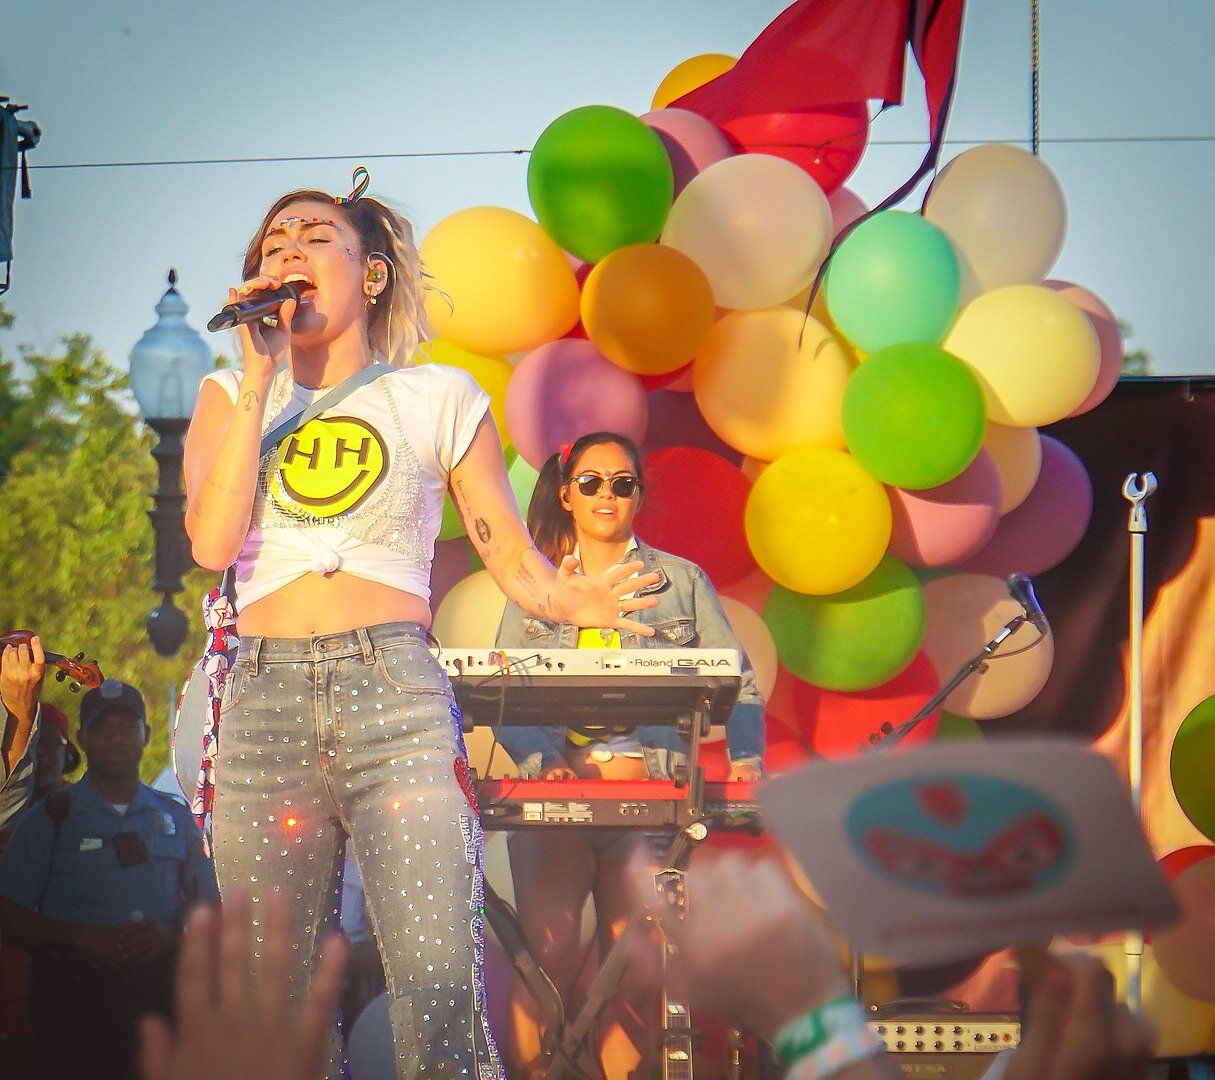 Miley Cyrus at Capital Pride, Washington, D.C. in 2017